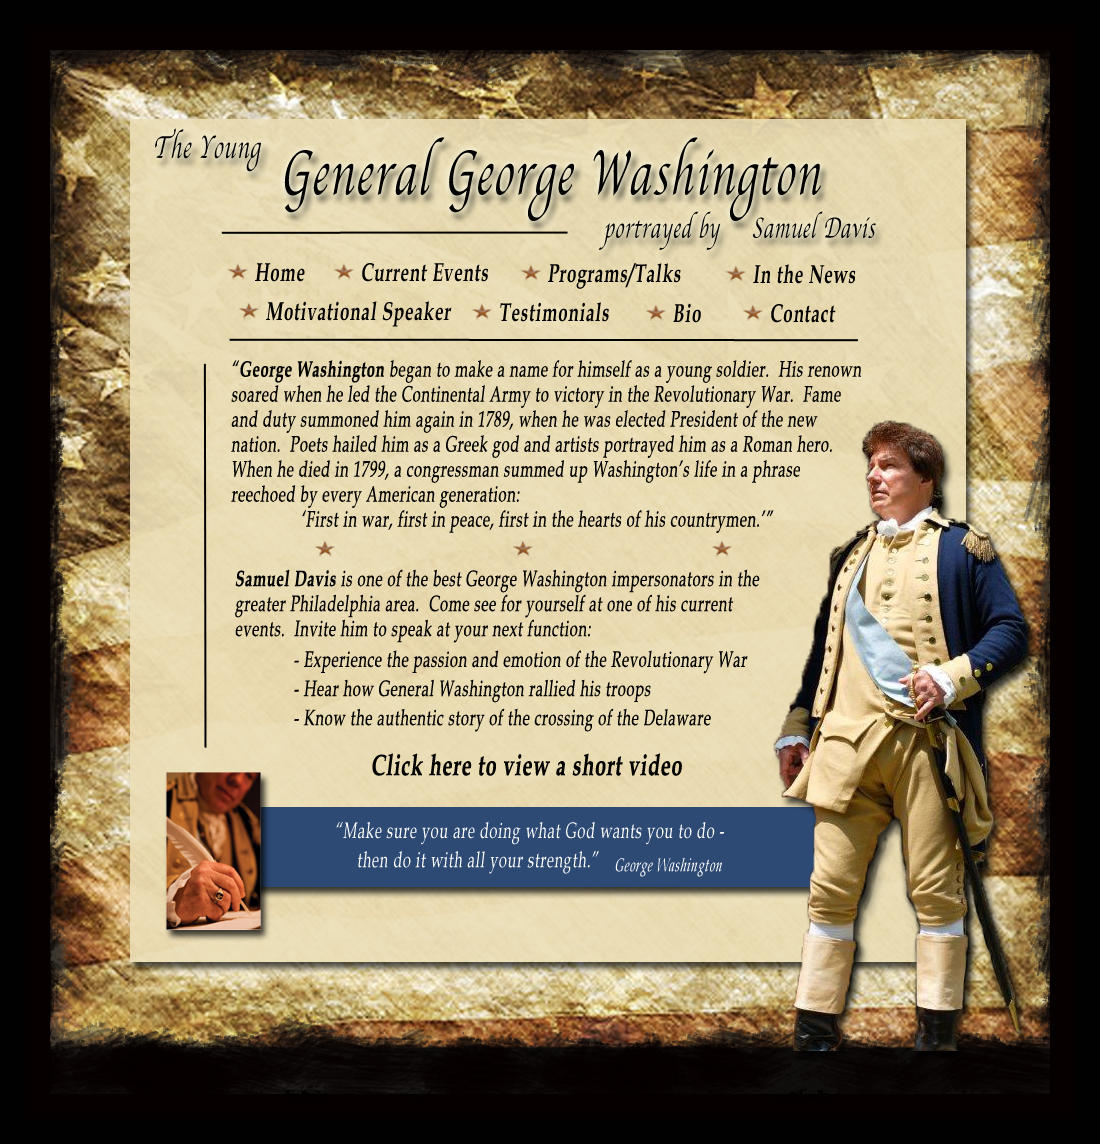 Sam Davis as General George Washington